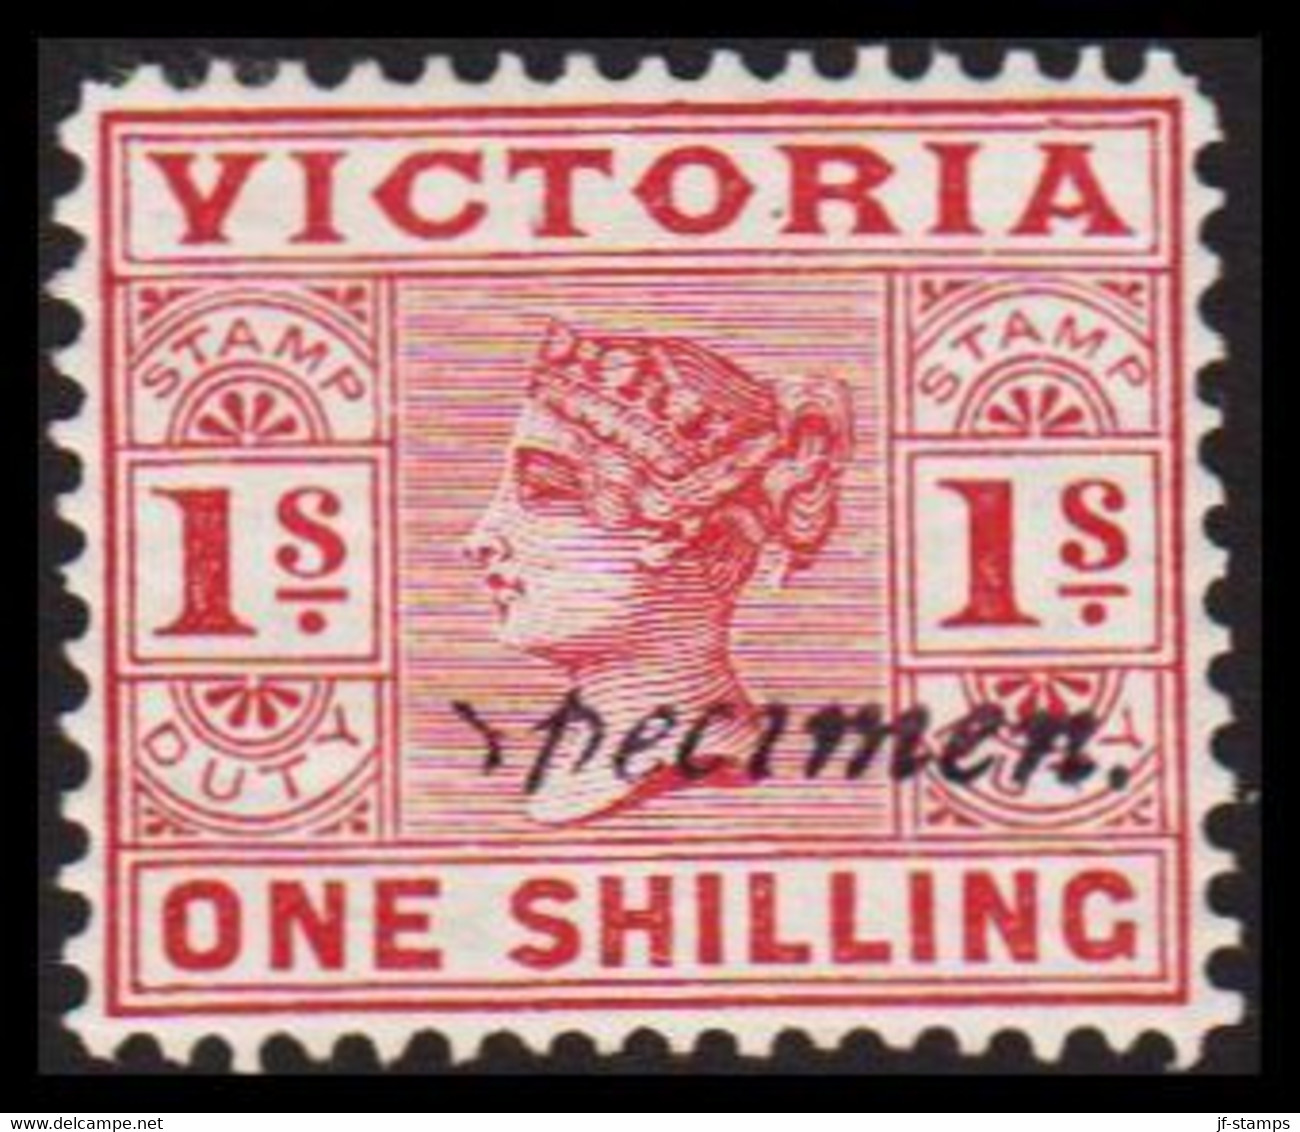 1886. VICTORIA AUSTRALIA  ONE SHILLING Victoria. Overprinted Specimen. Hinged. Beautiful Stamp.  - JF530101 - Ongebruikt